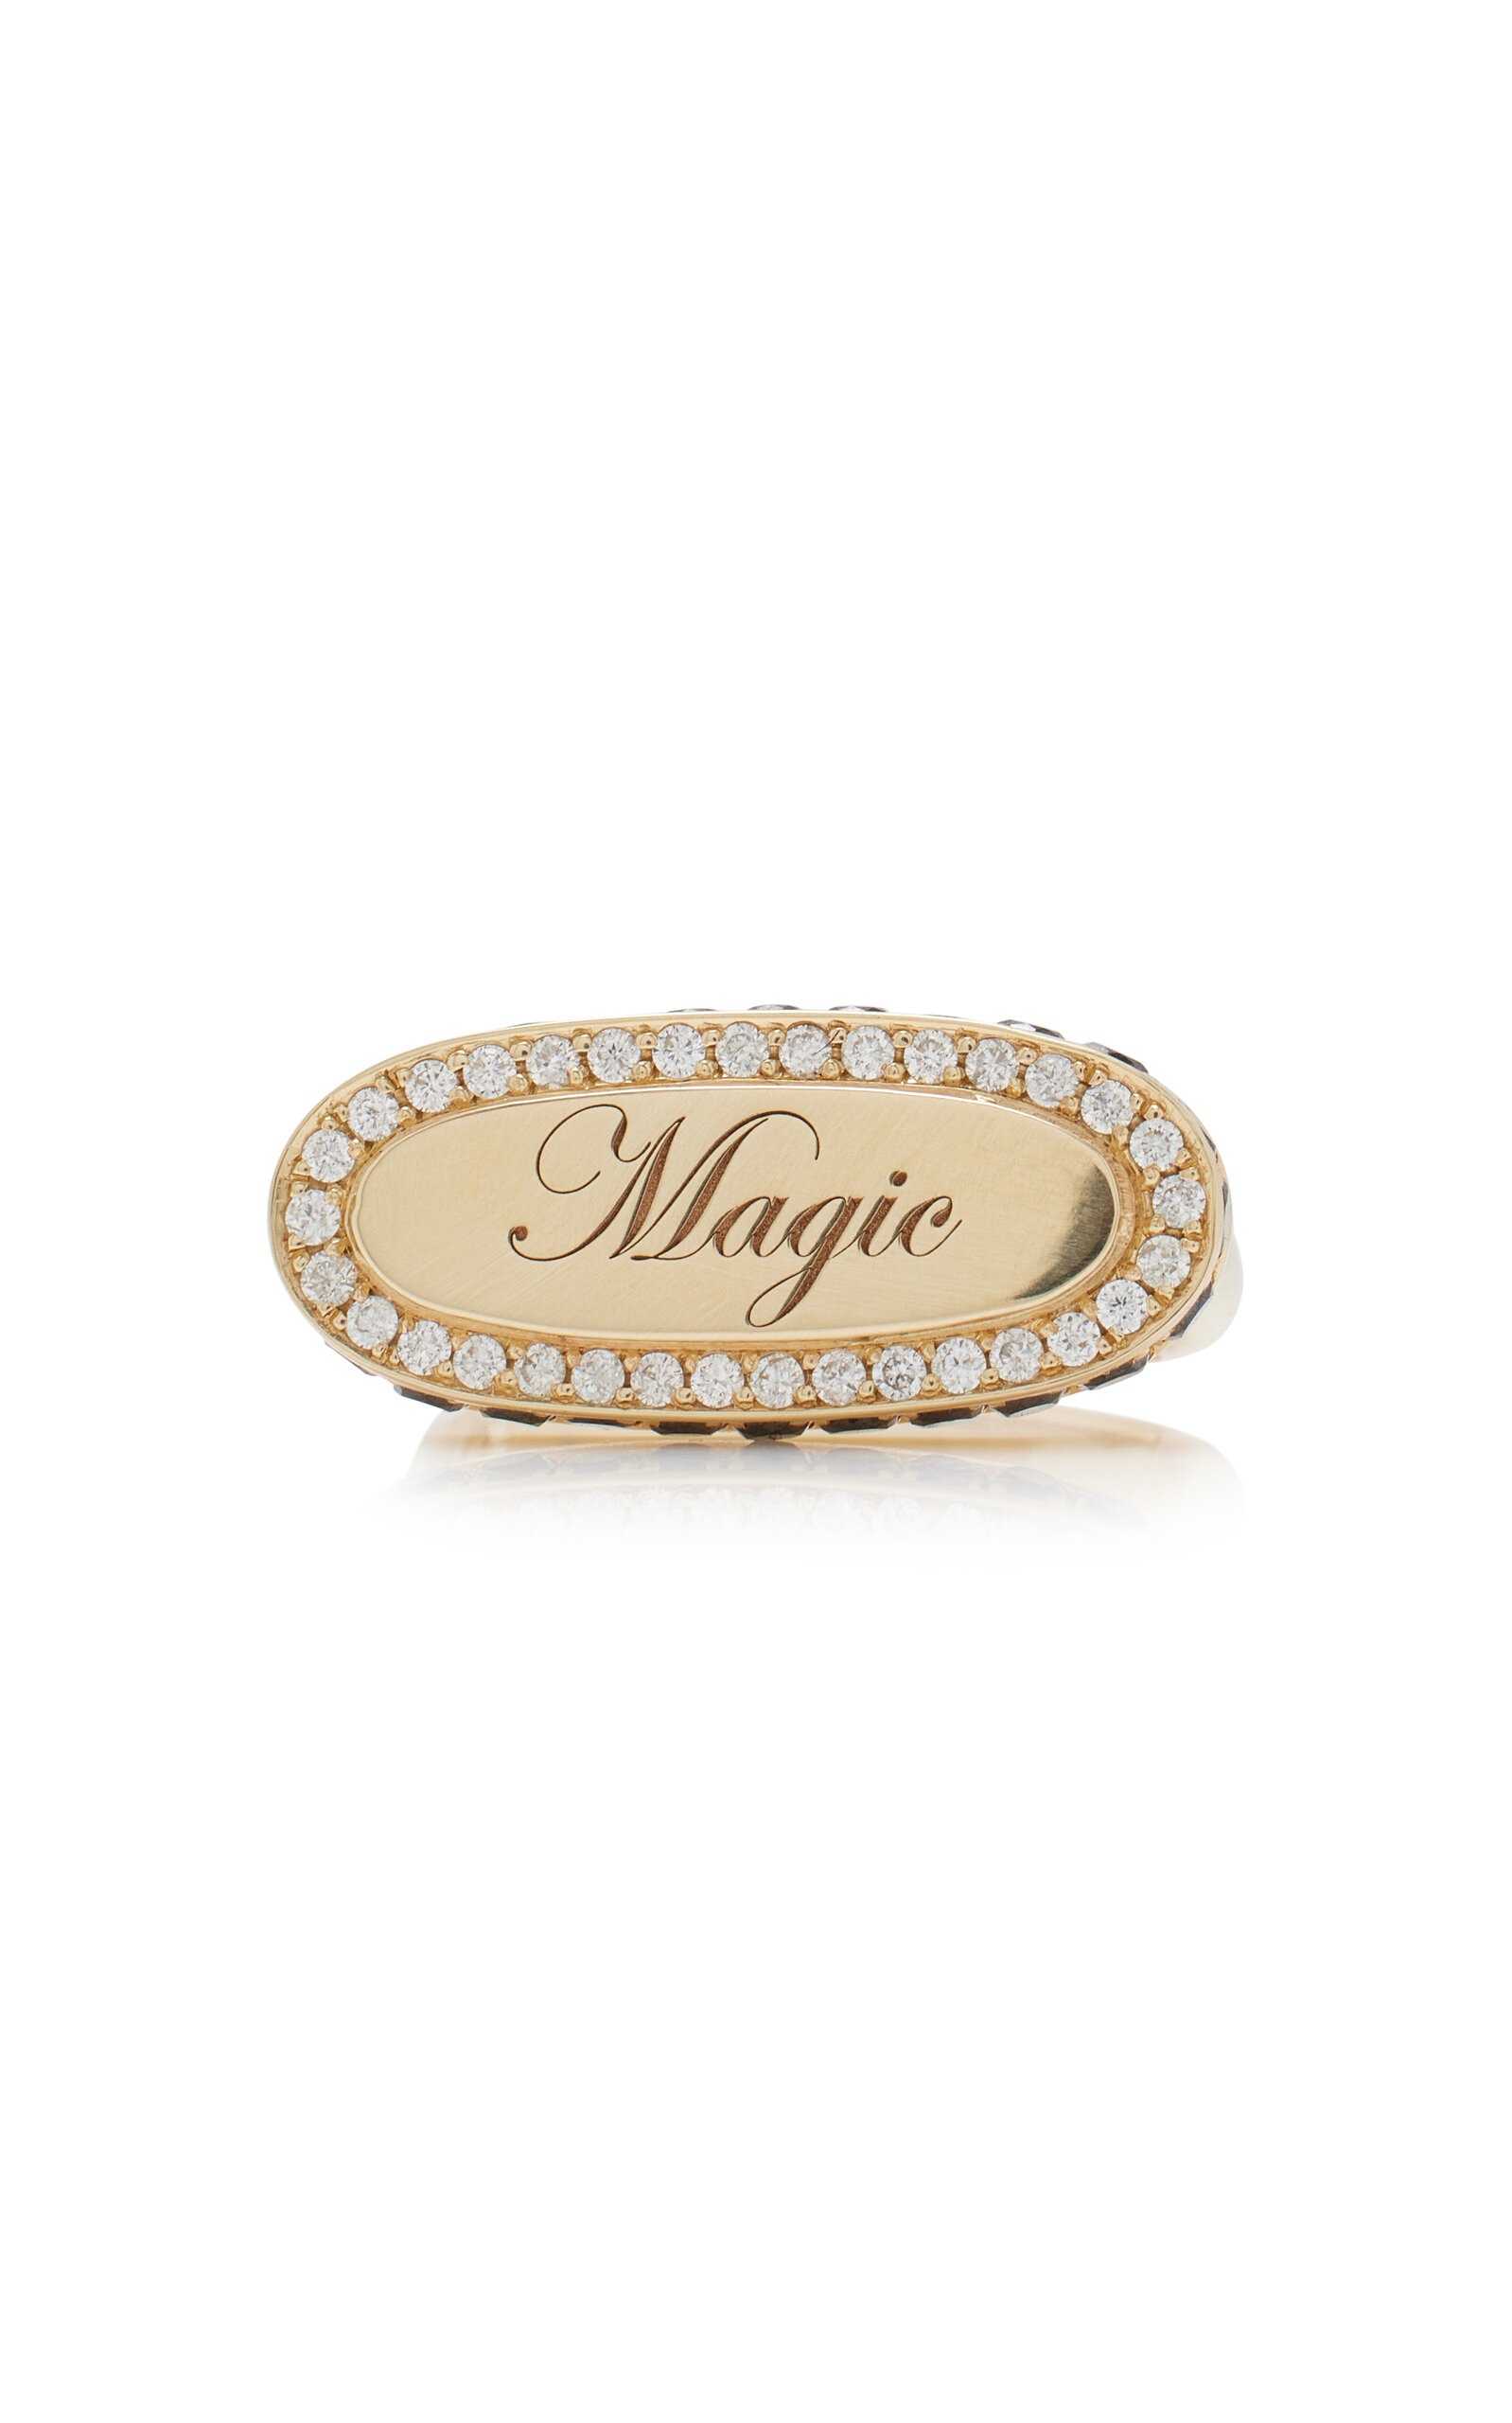 Magic 14K Yellow Gold Diamond Signet Ring